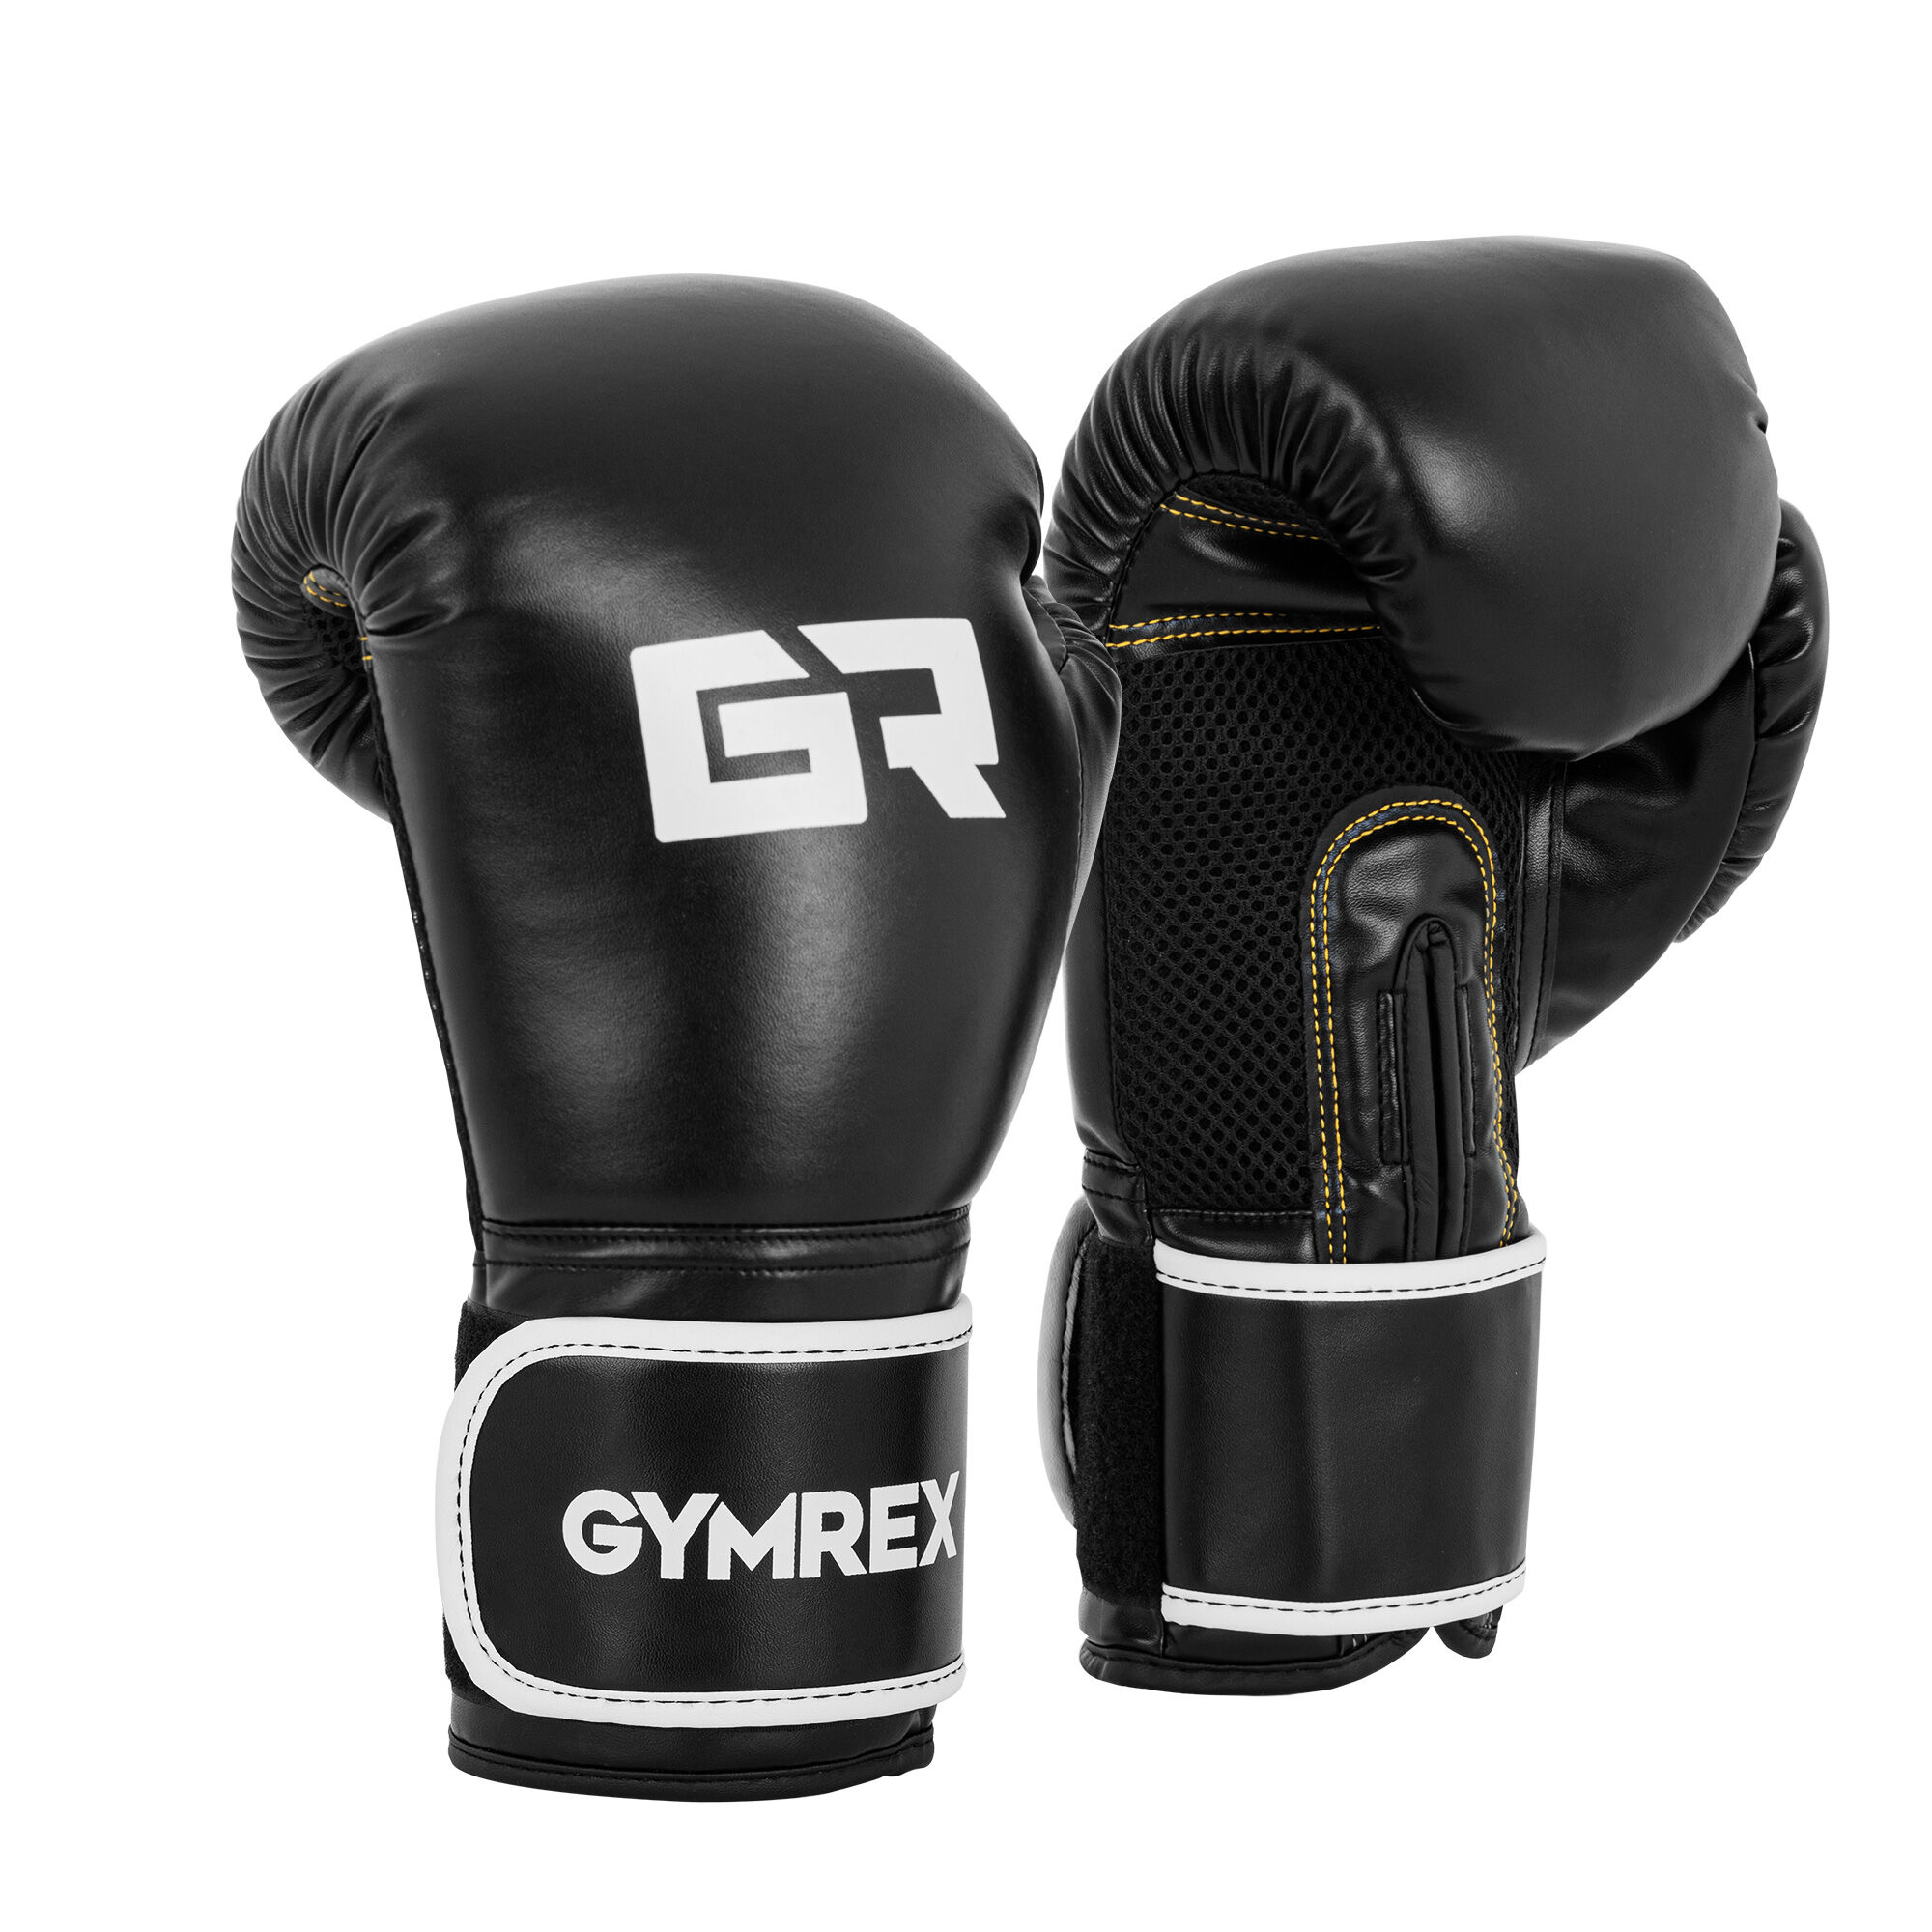 Gymrex Boxing Gloves - 14 oz - interior mesh - black GR-BG 14B